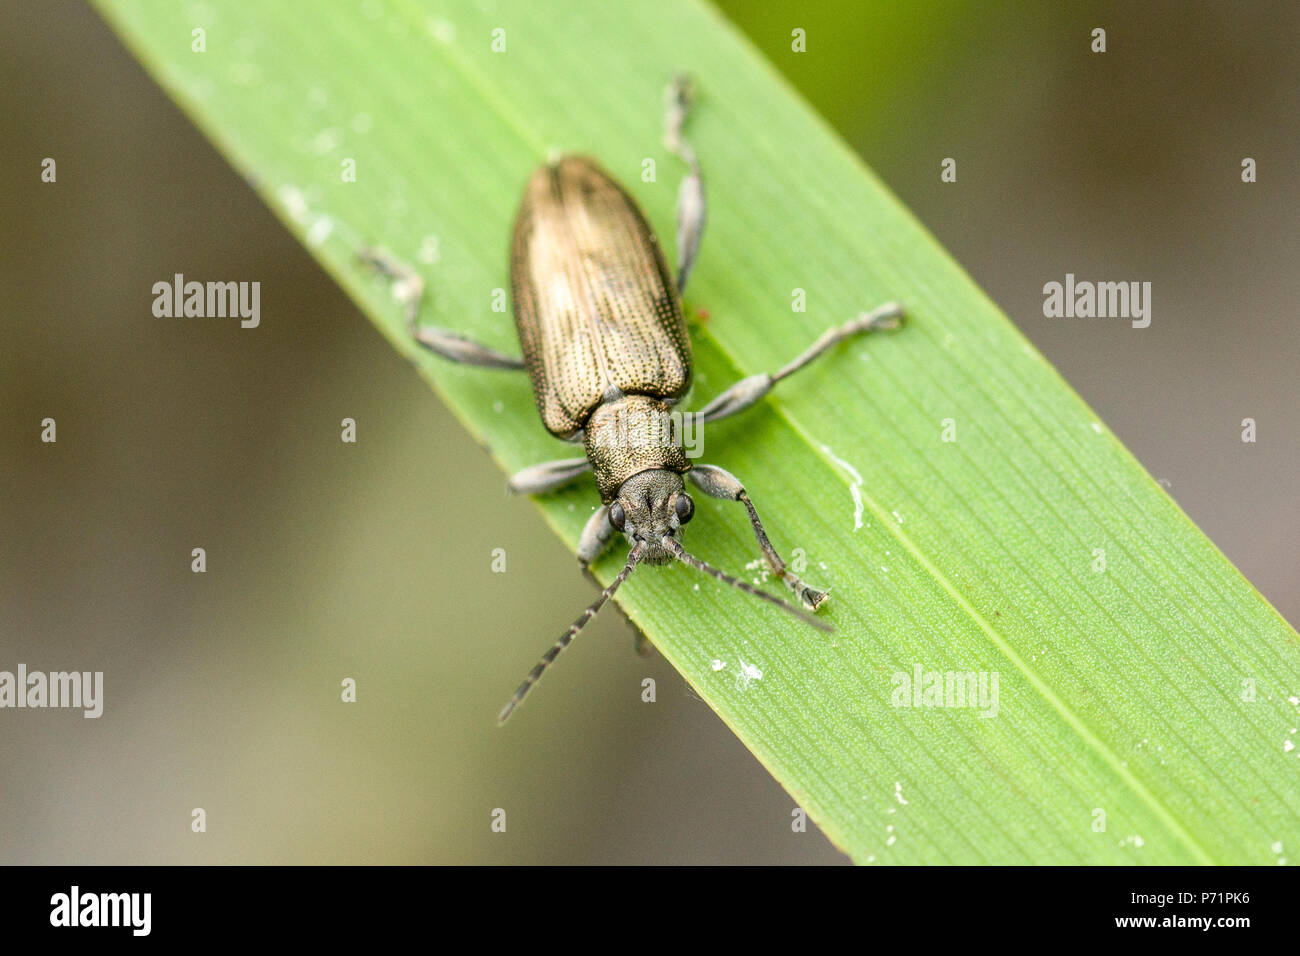 An aquatic leaf beetle (Donacia sp.) on an leaf. Stock Photo